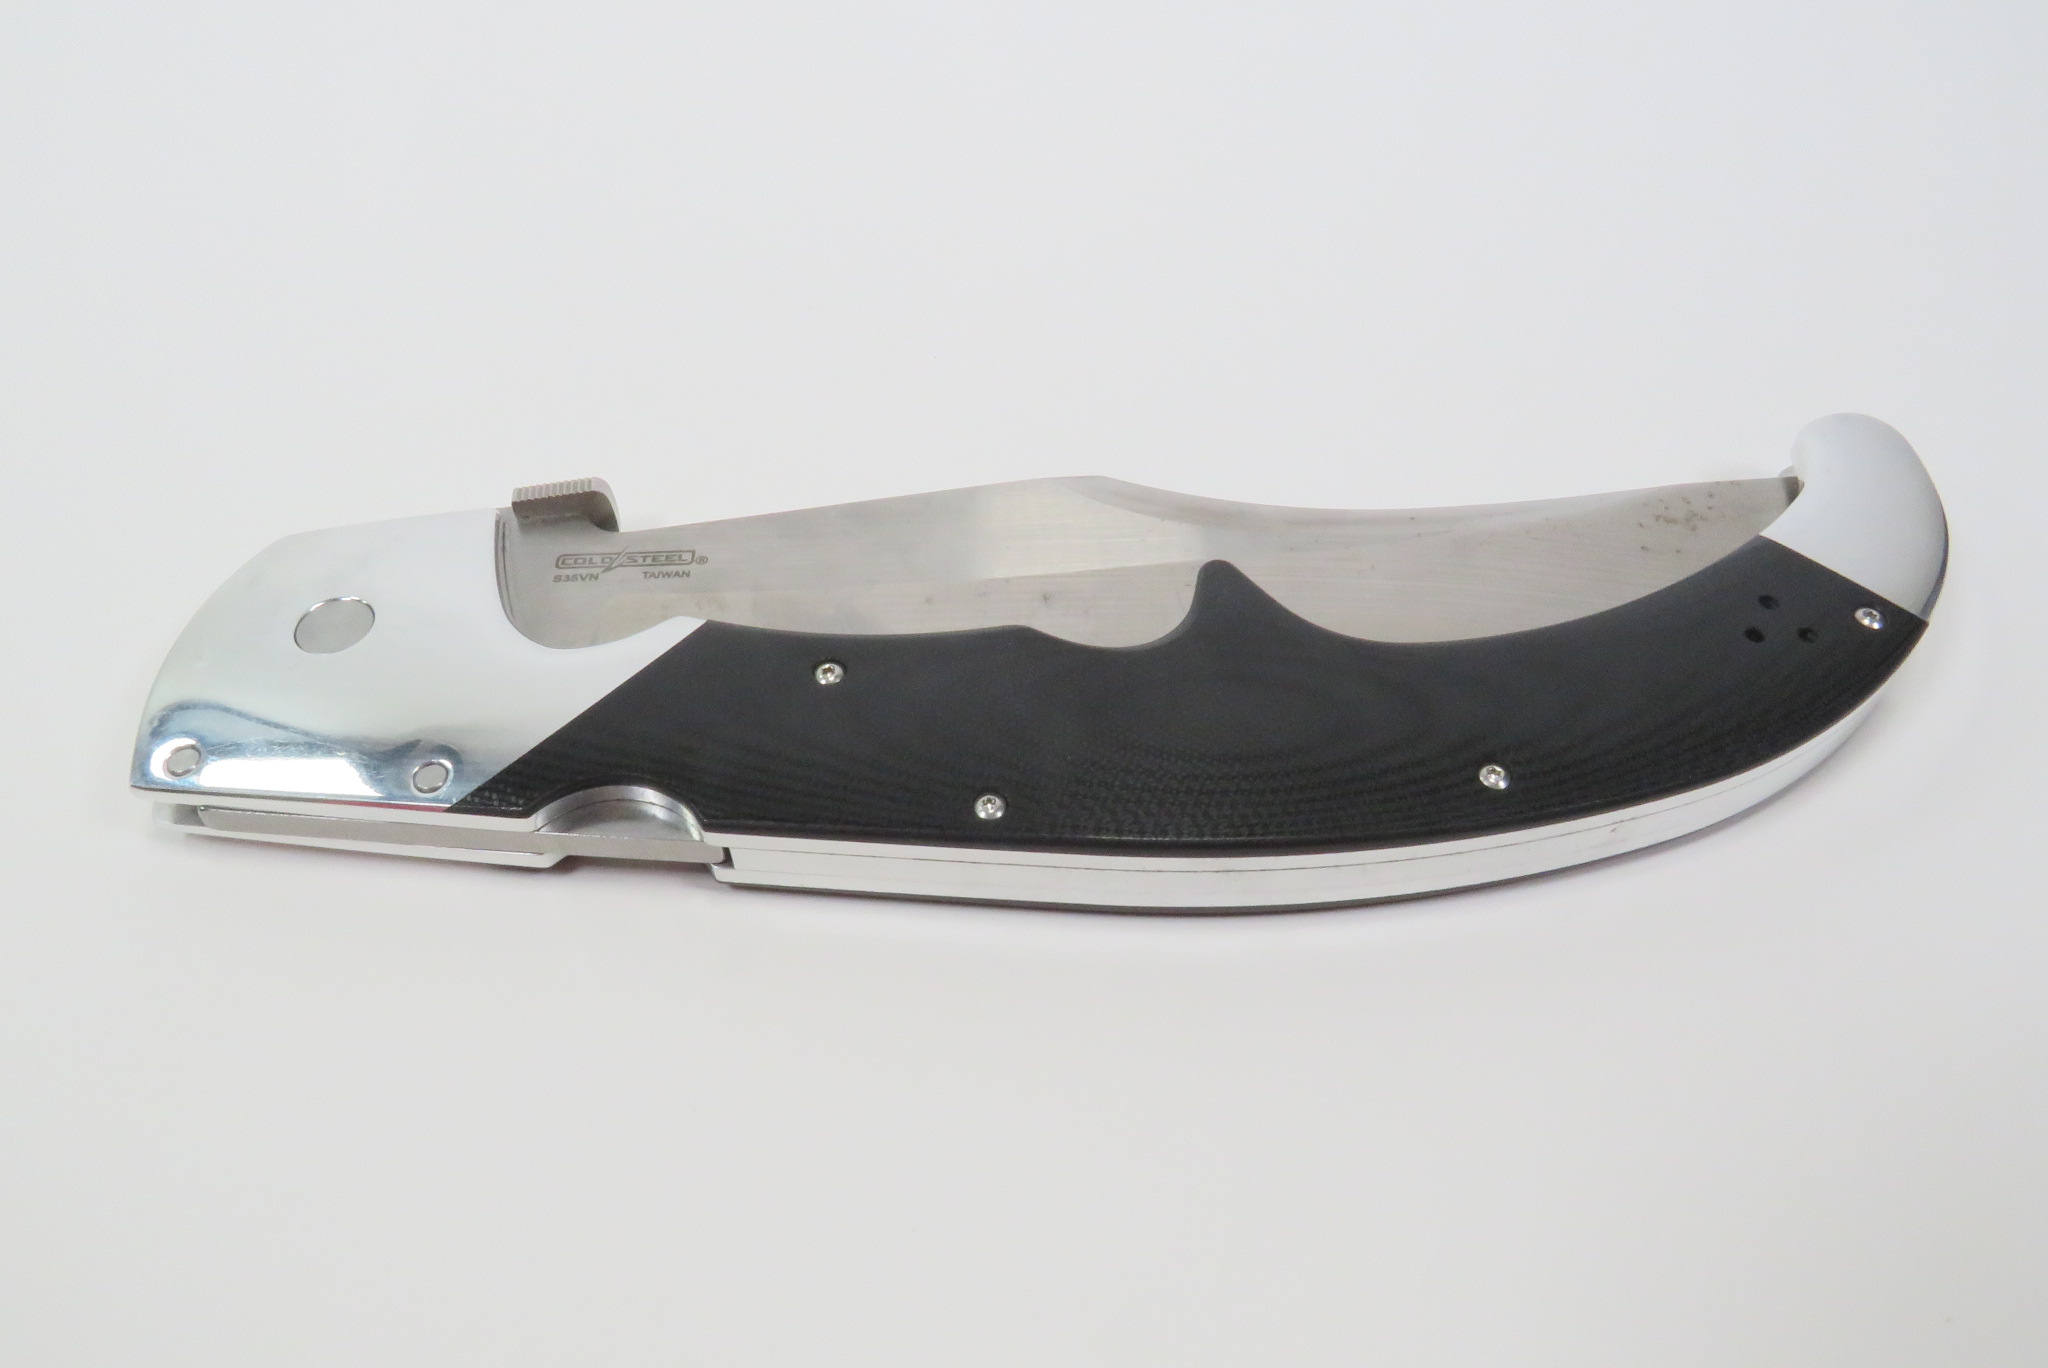 ESPADA XL (S35VN)  Cold Steel Knives